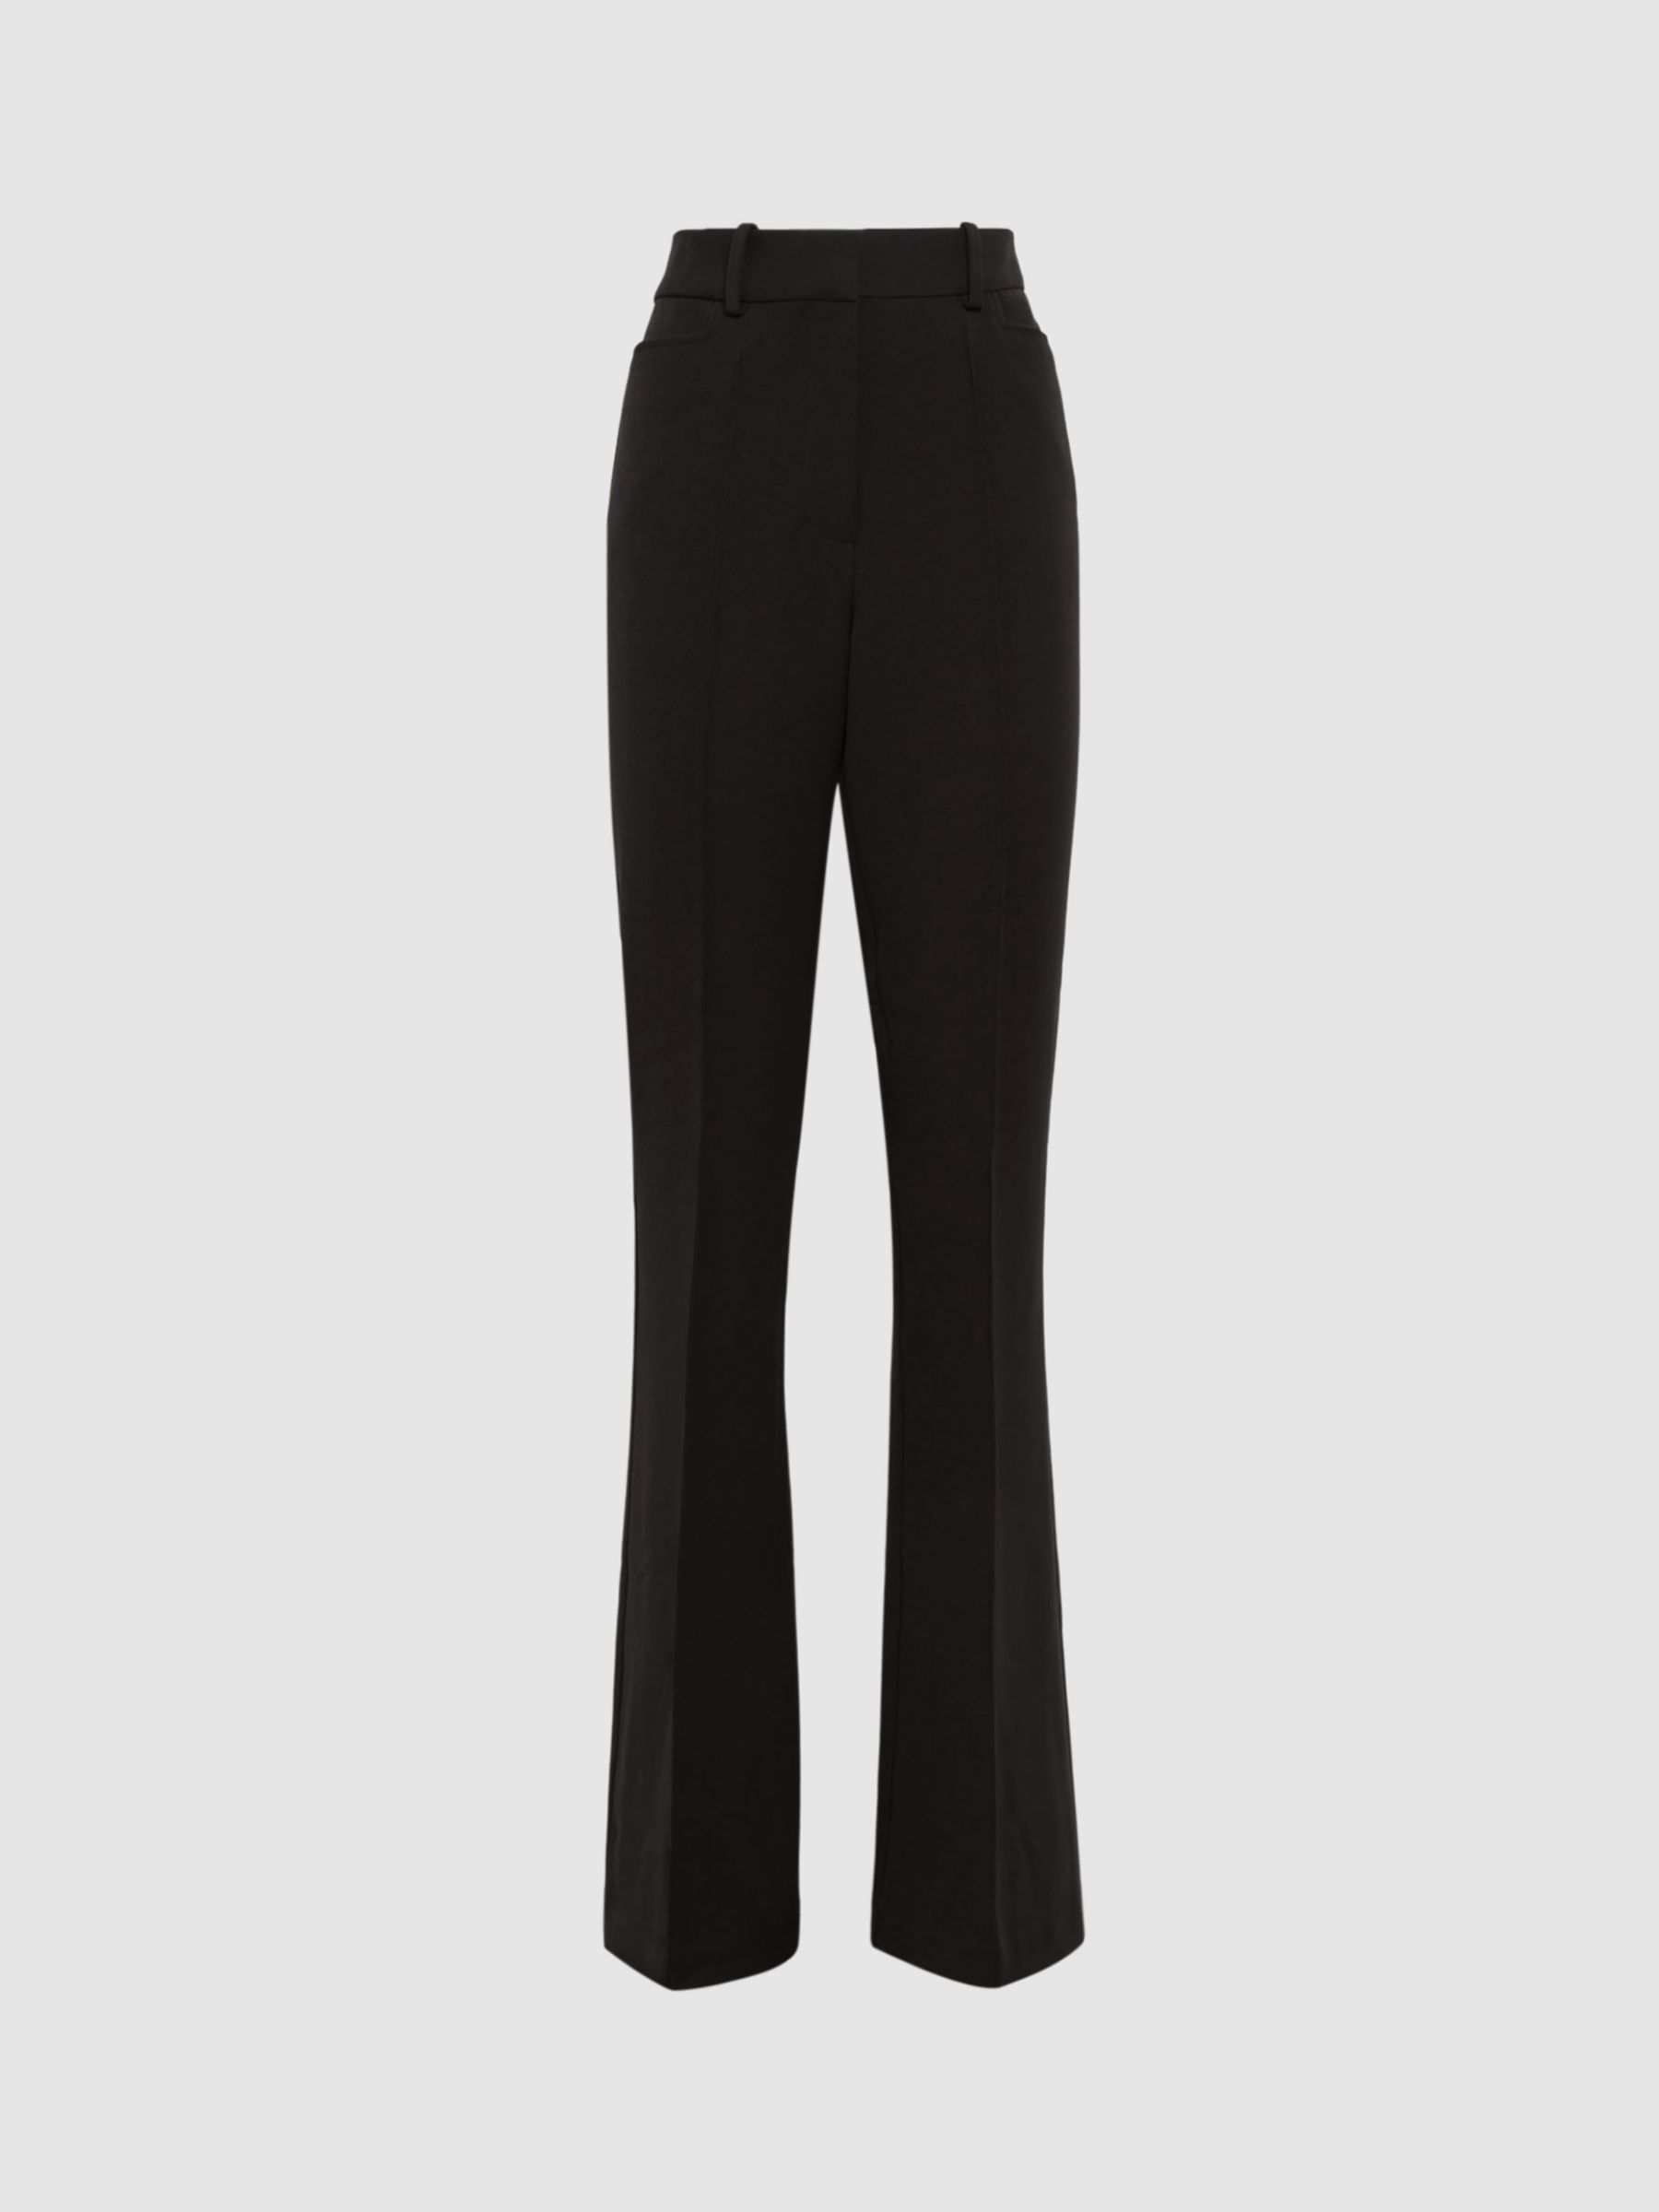 Reiss Petite Gabi Flared Tailored Trousers, Black, 6